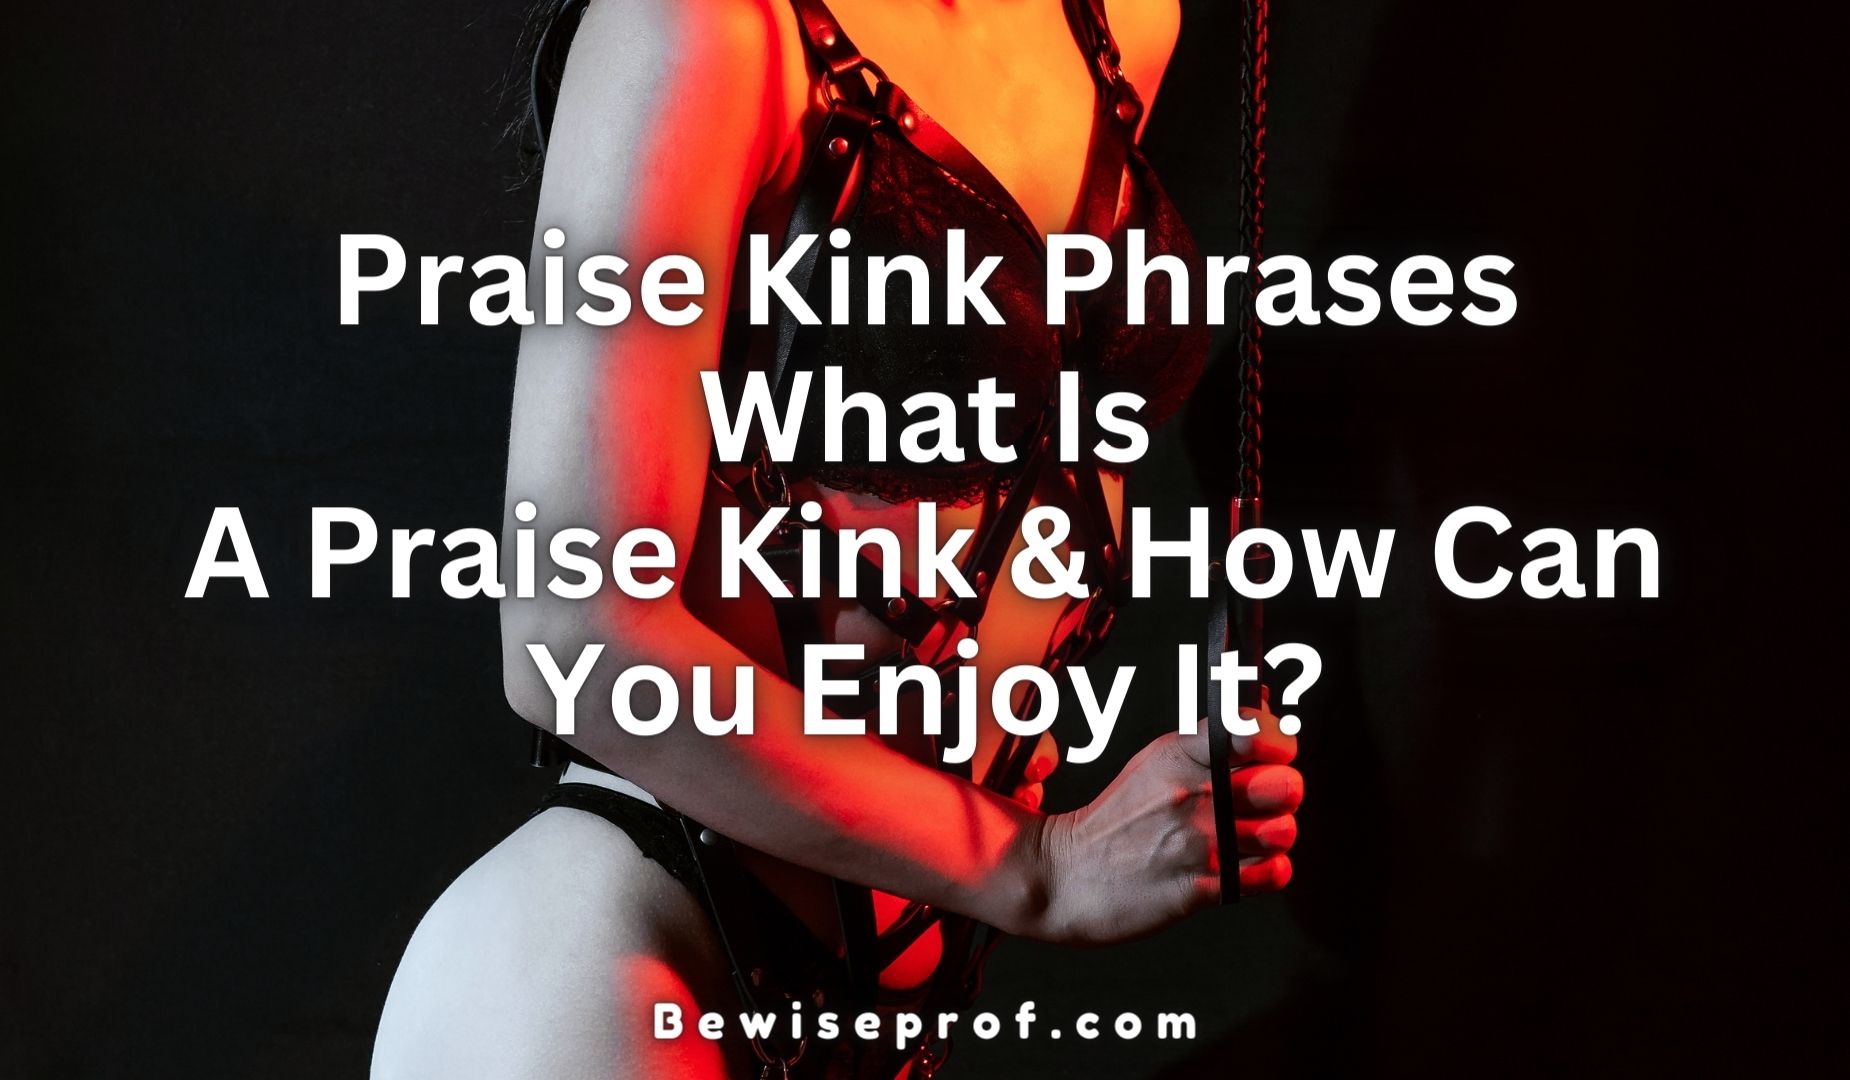 Praise Kink Phrases: What Is A Praise Kink